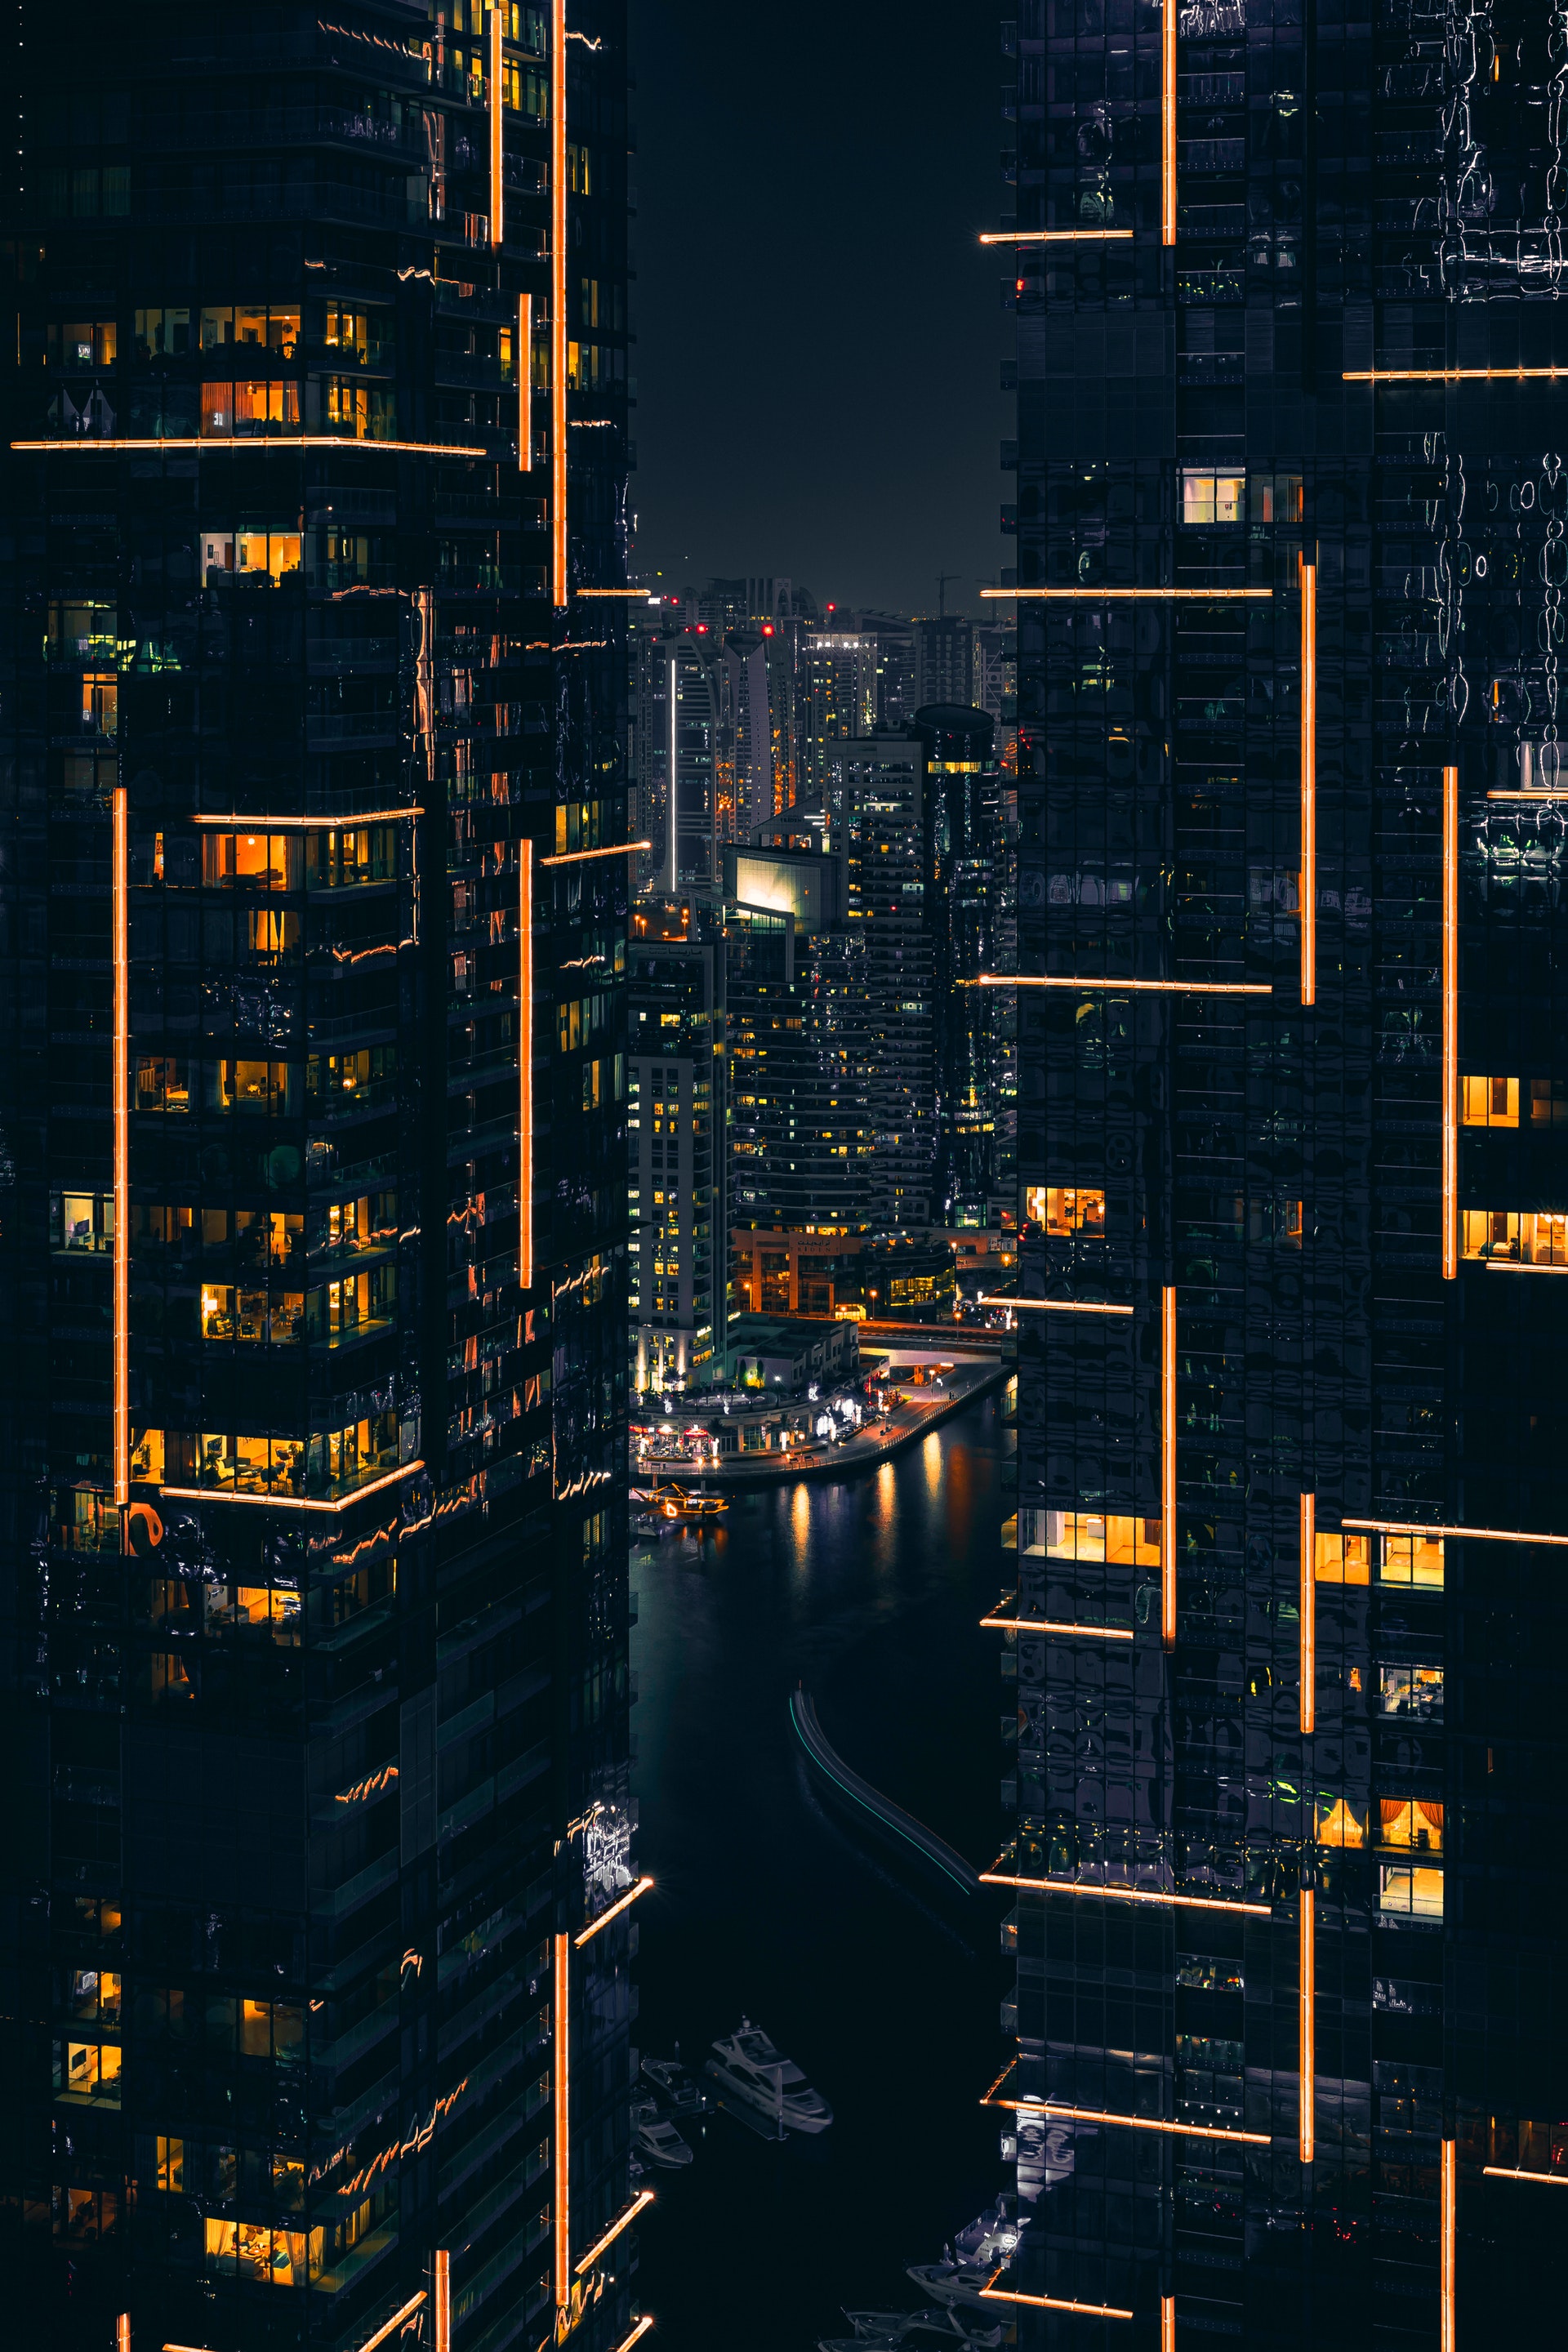 Dubai buildings lit at night